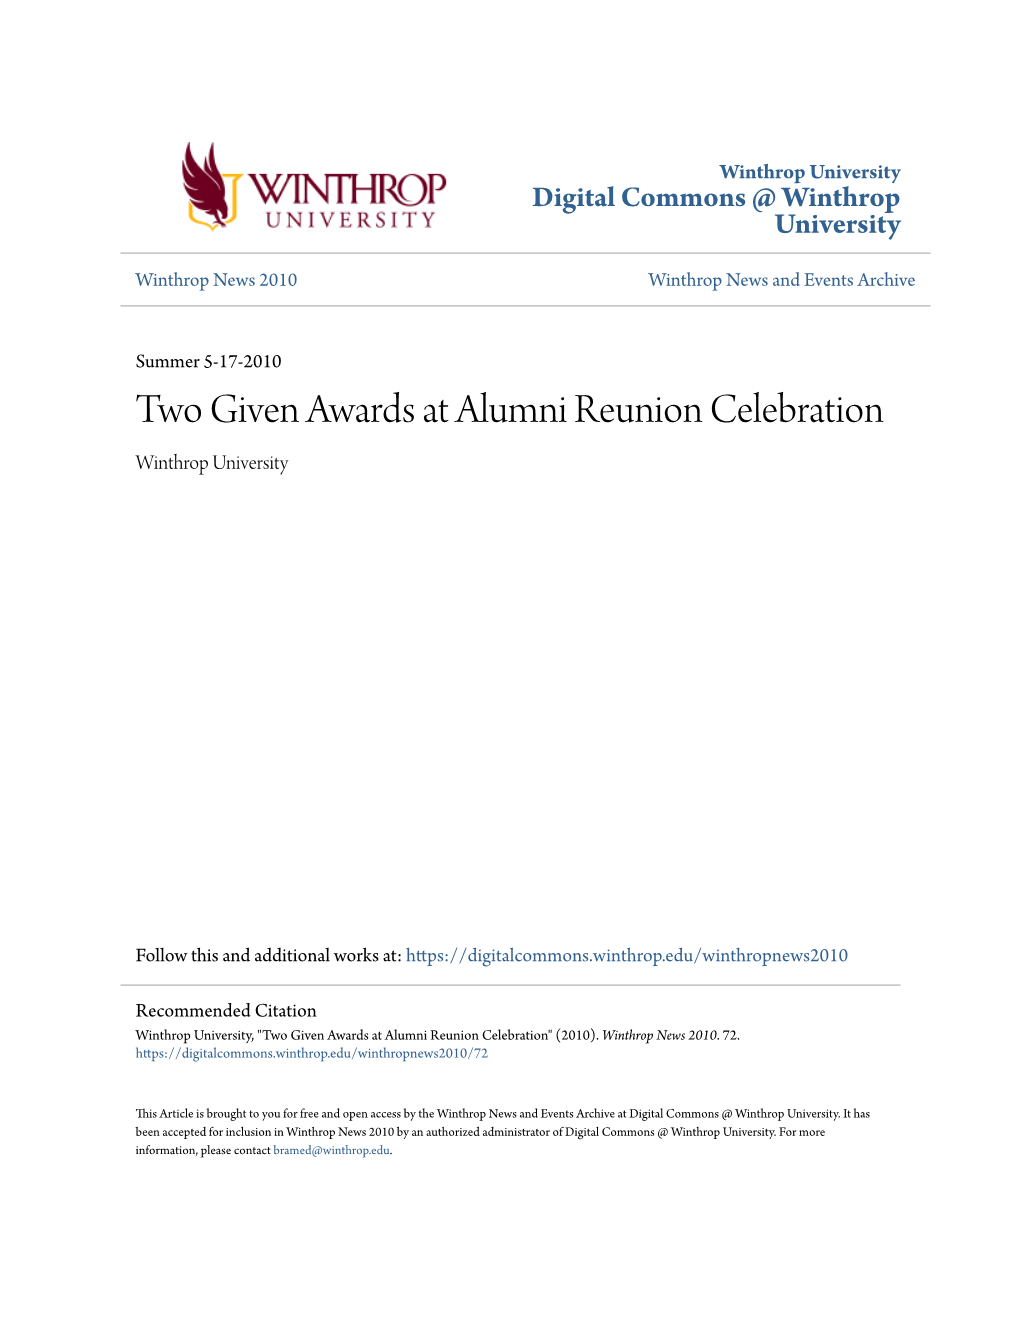 Two Given Awards at Alumni Reunion Celebration Winthrop University